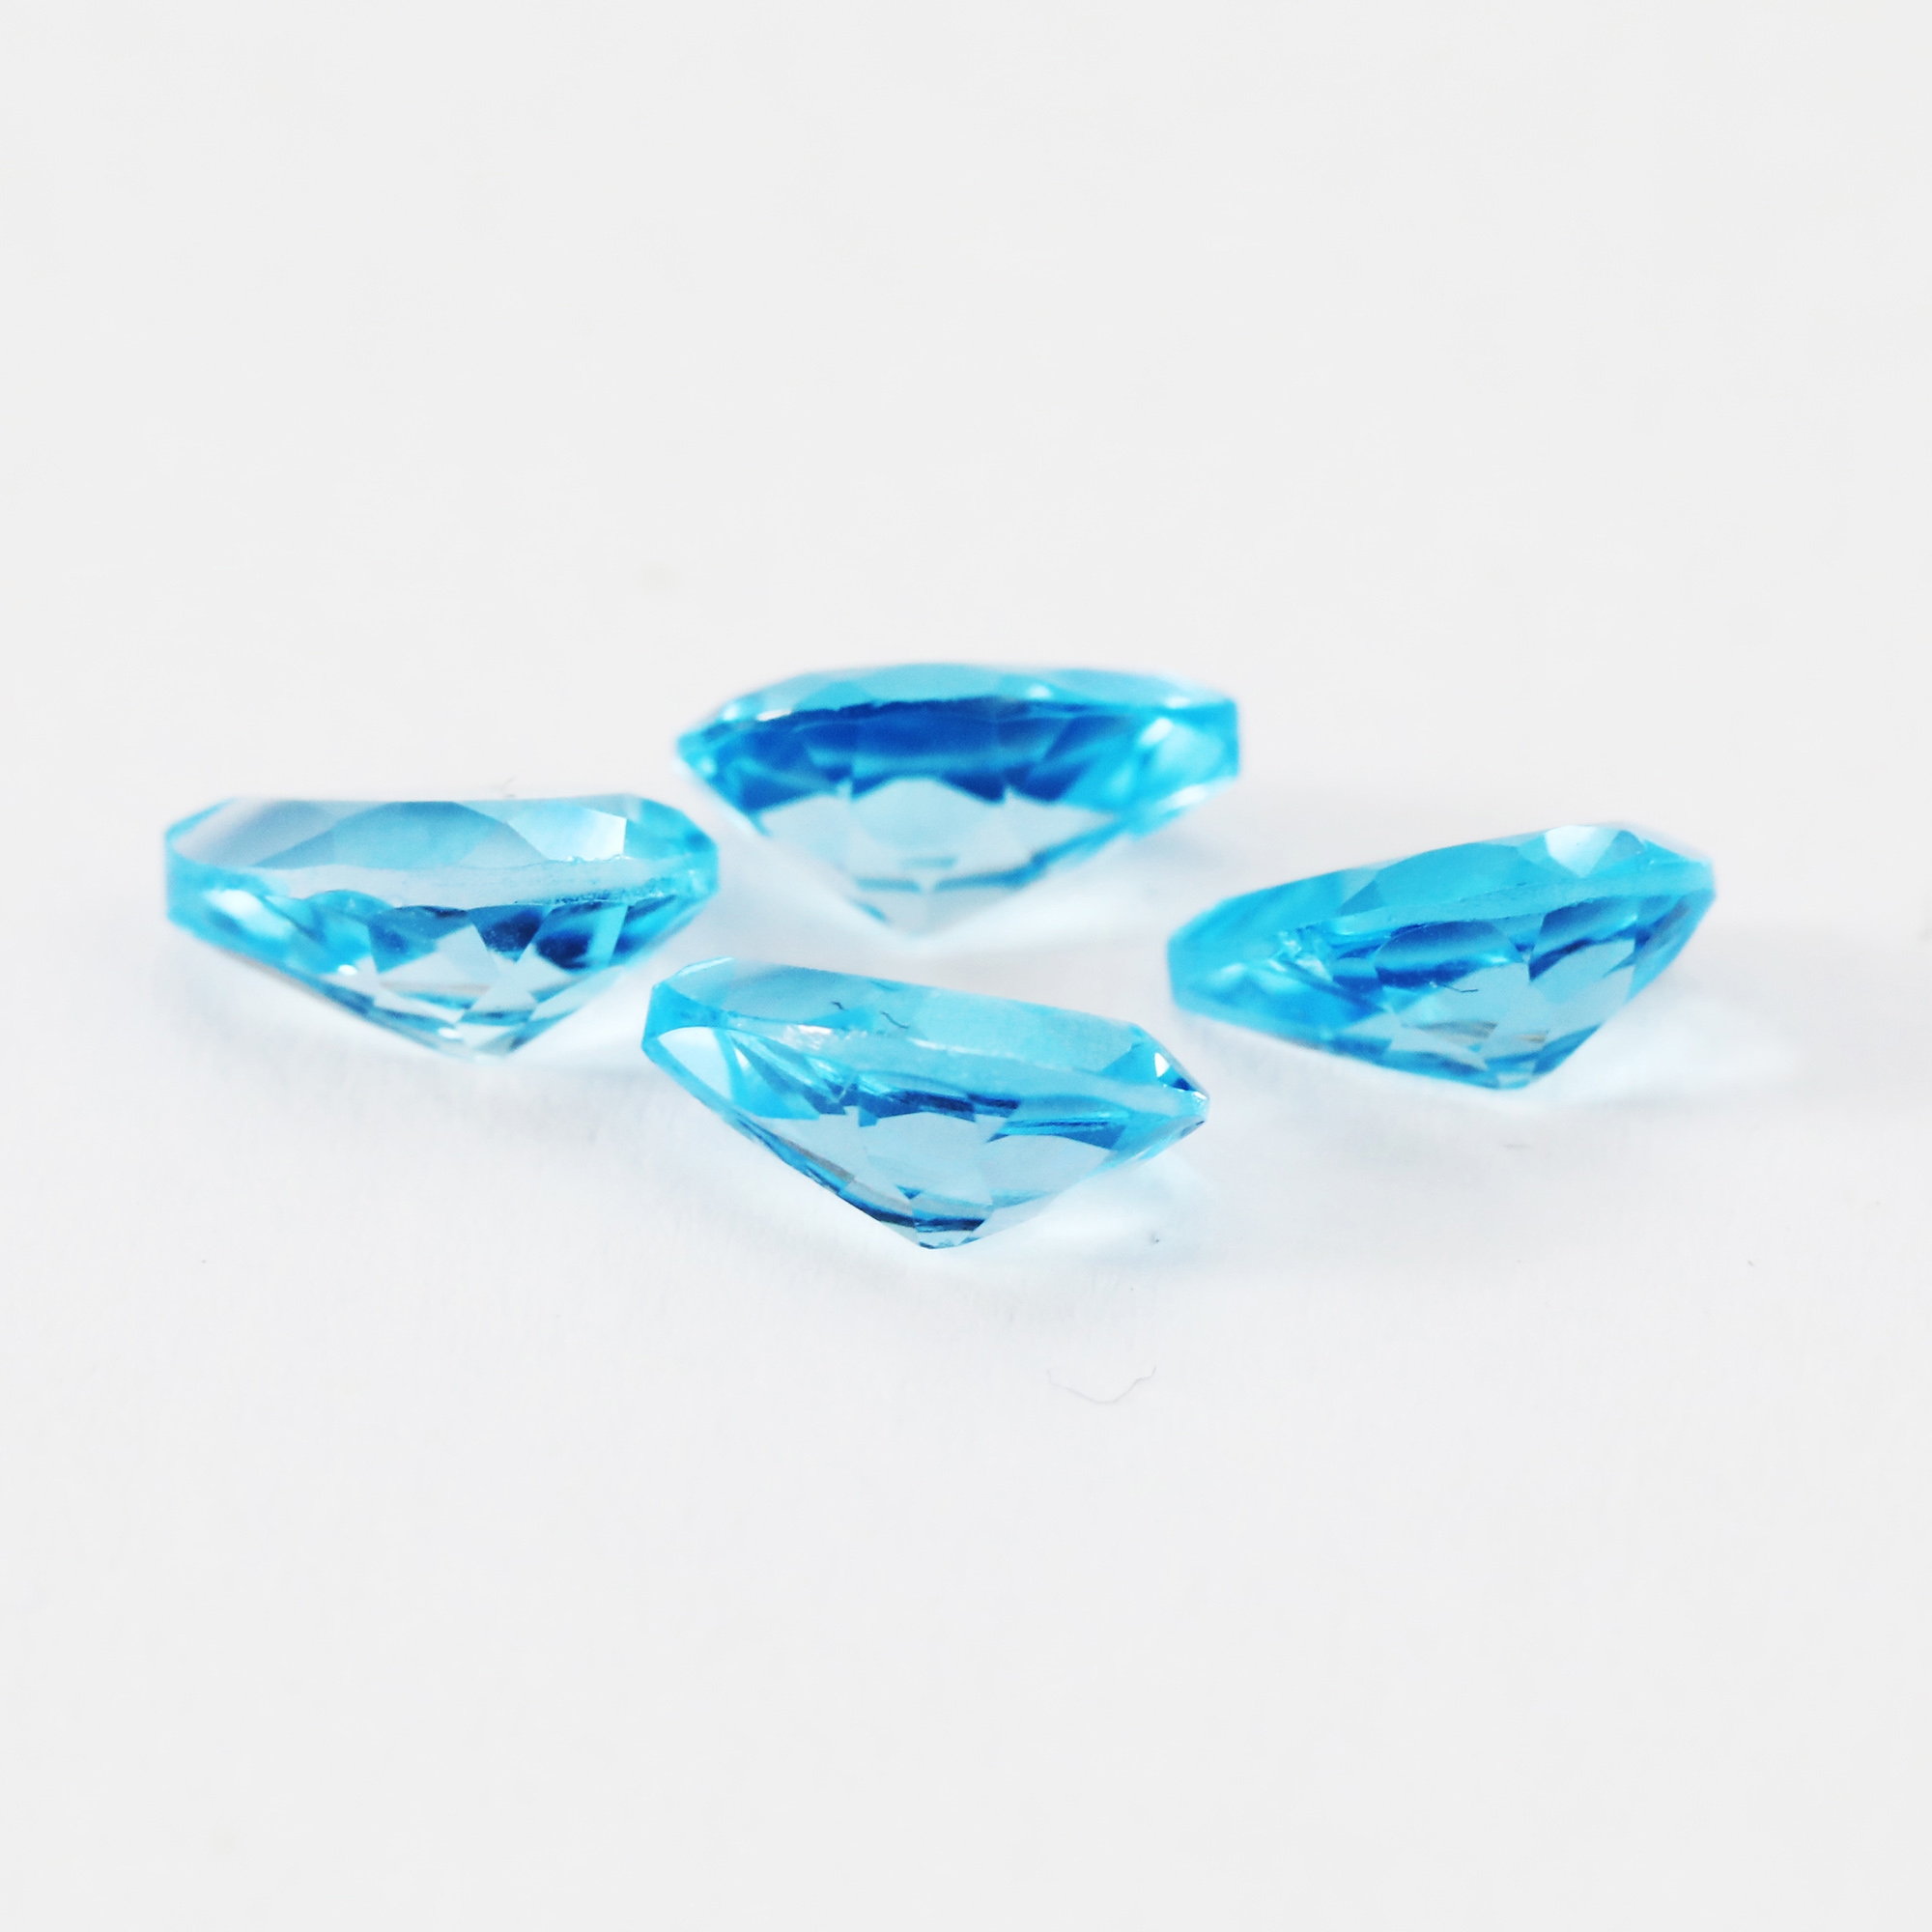 Natural Pear Faceted Swiss Blue Topaz Gemstone November Birthstone DIY Loose Semi Precious Gemstone DIY Jewelry Supplies 4150020 - Click Image to Close